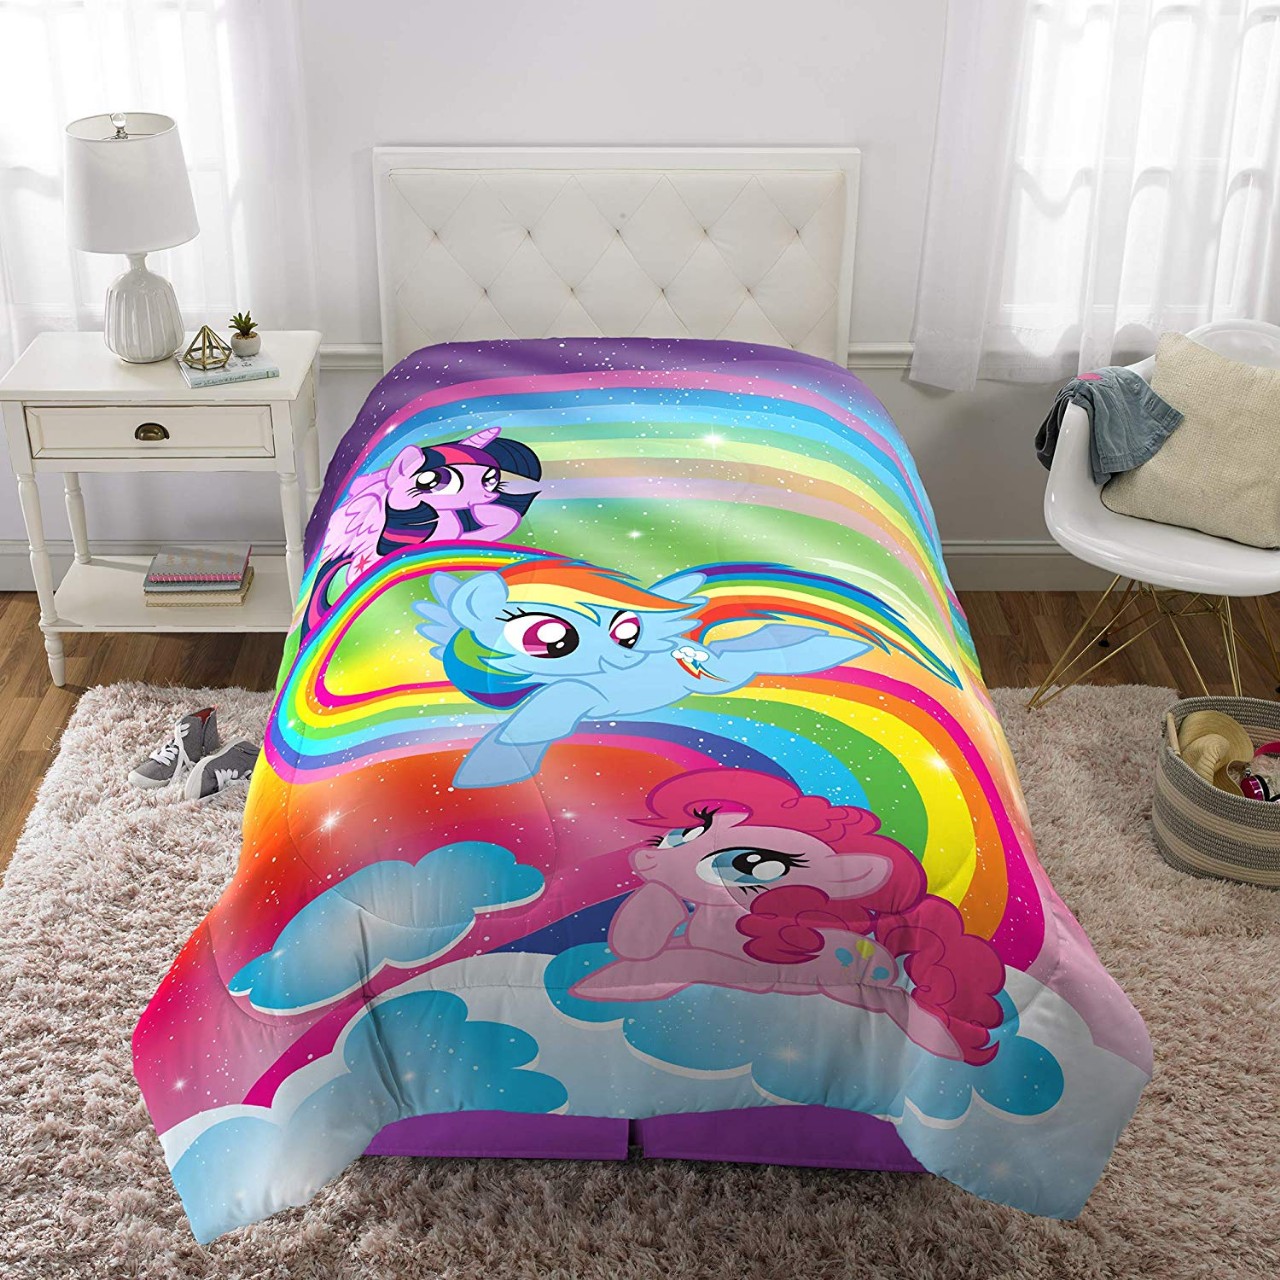 Franco Kids Bedding Super Soft Comforter, Twin Size 64” x 86”, My Little Pony